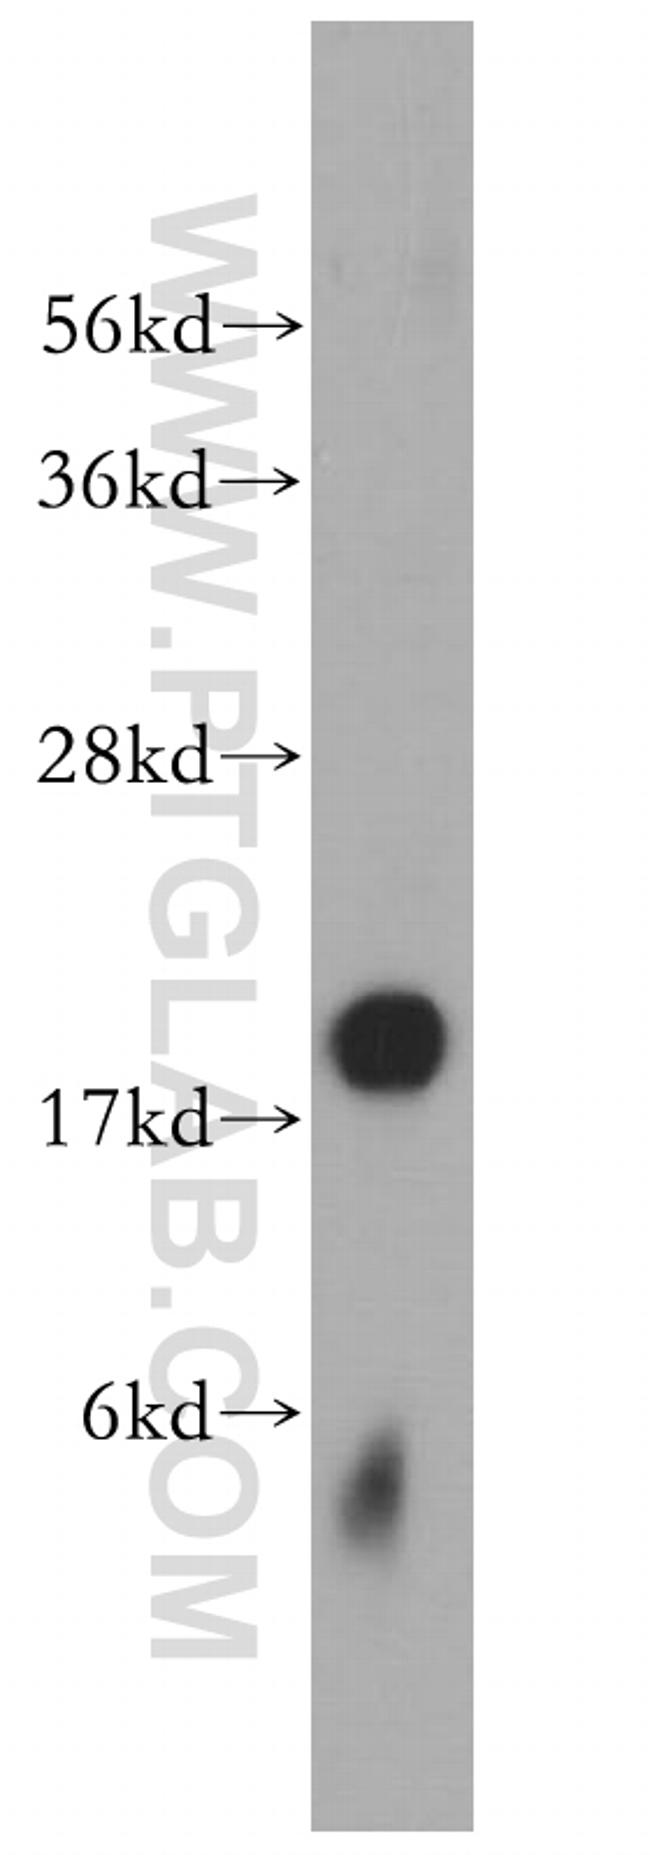 ATP5H Antibody in Western Blot (WB)